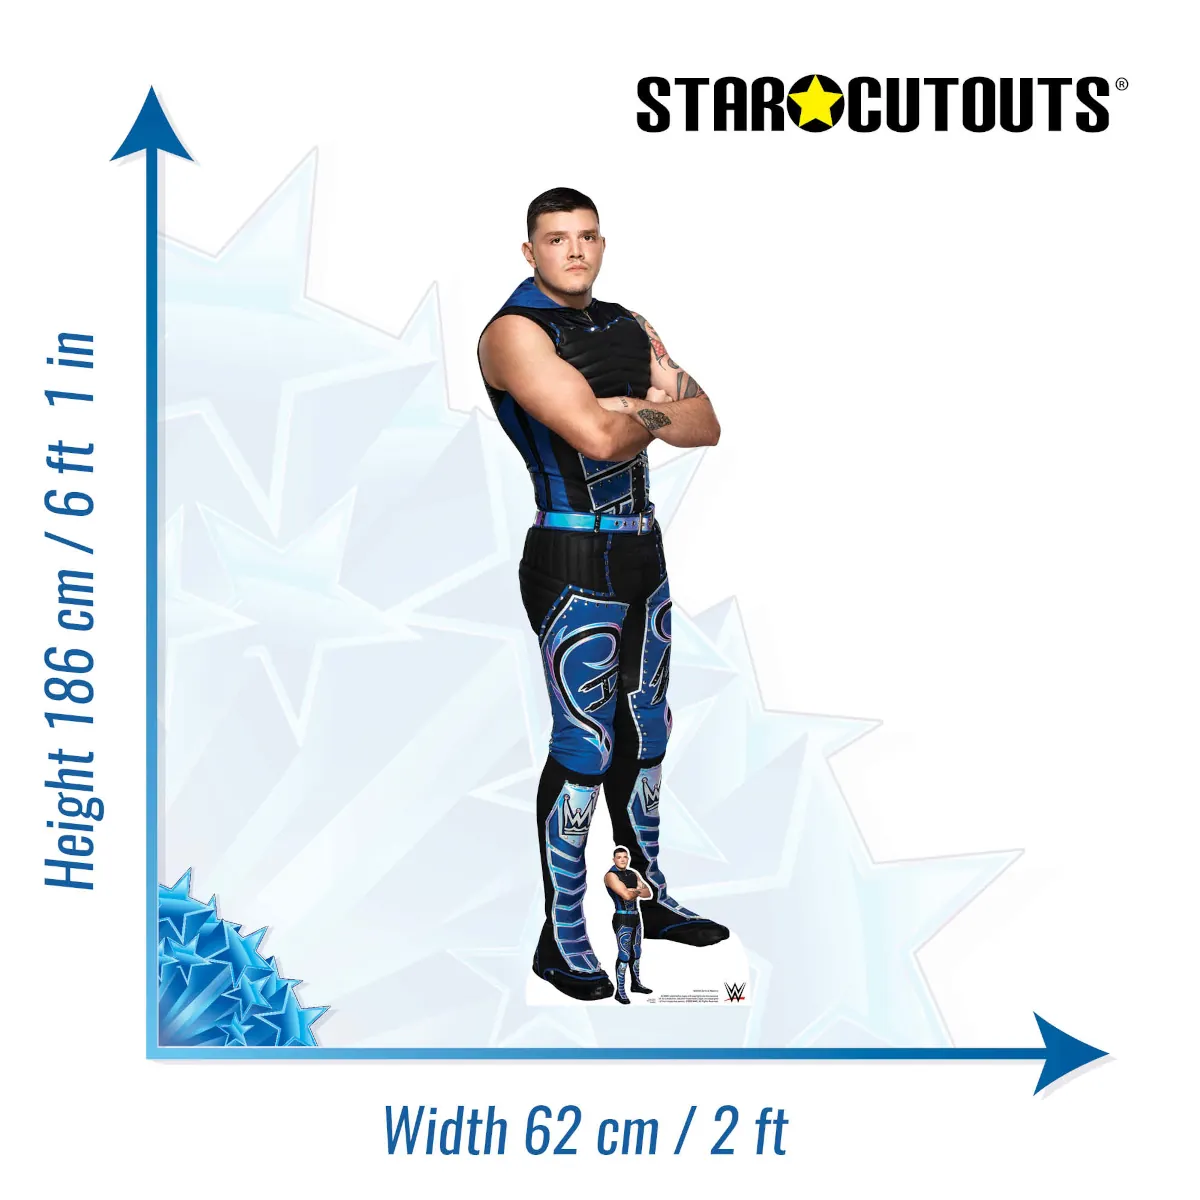 SC4163 Dominik Mysterio (WWE) Official Lifesize + Mini Cardboard Cutout Standee Size